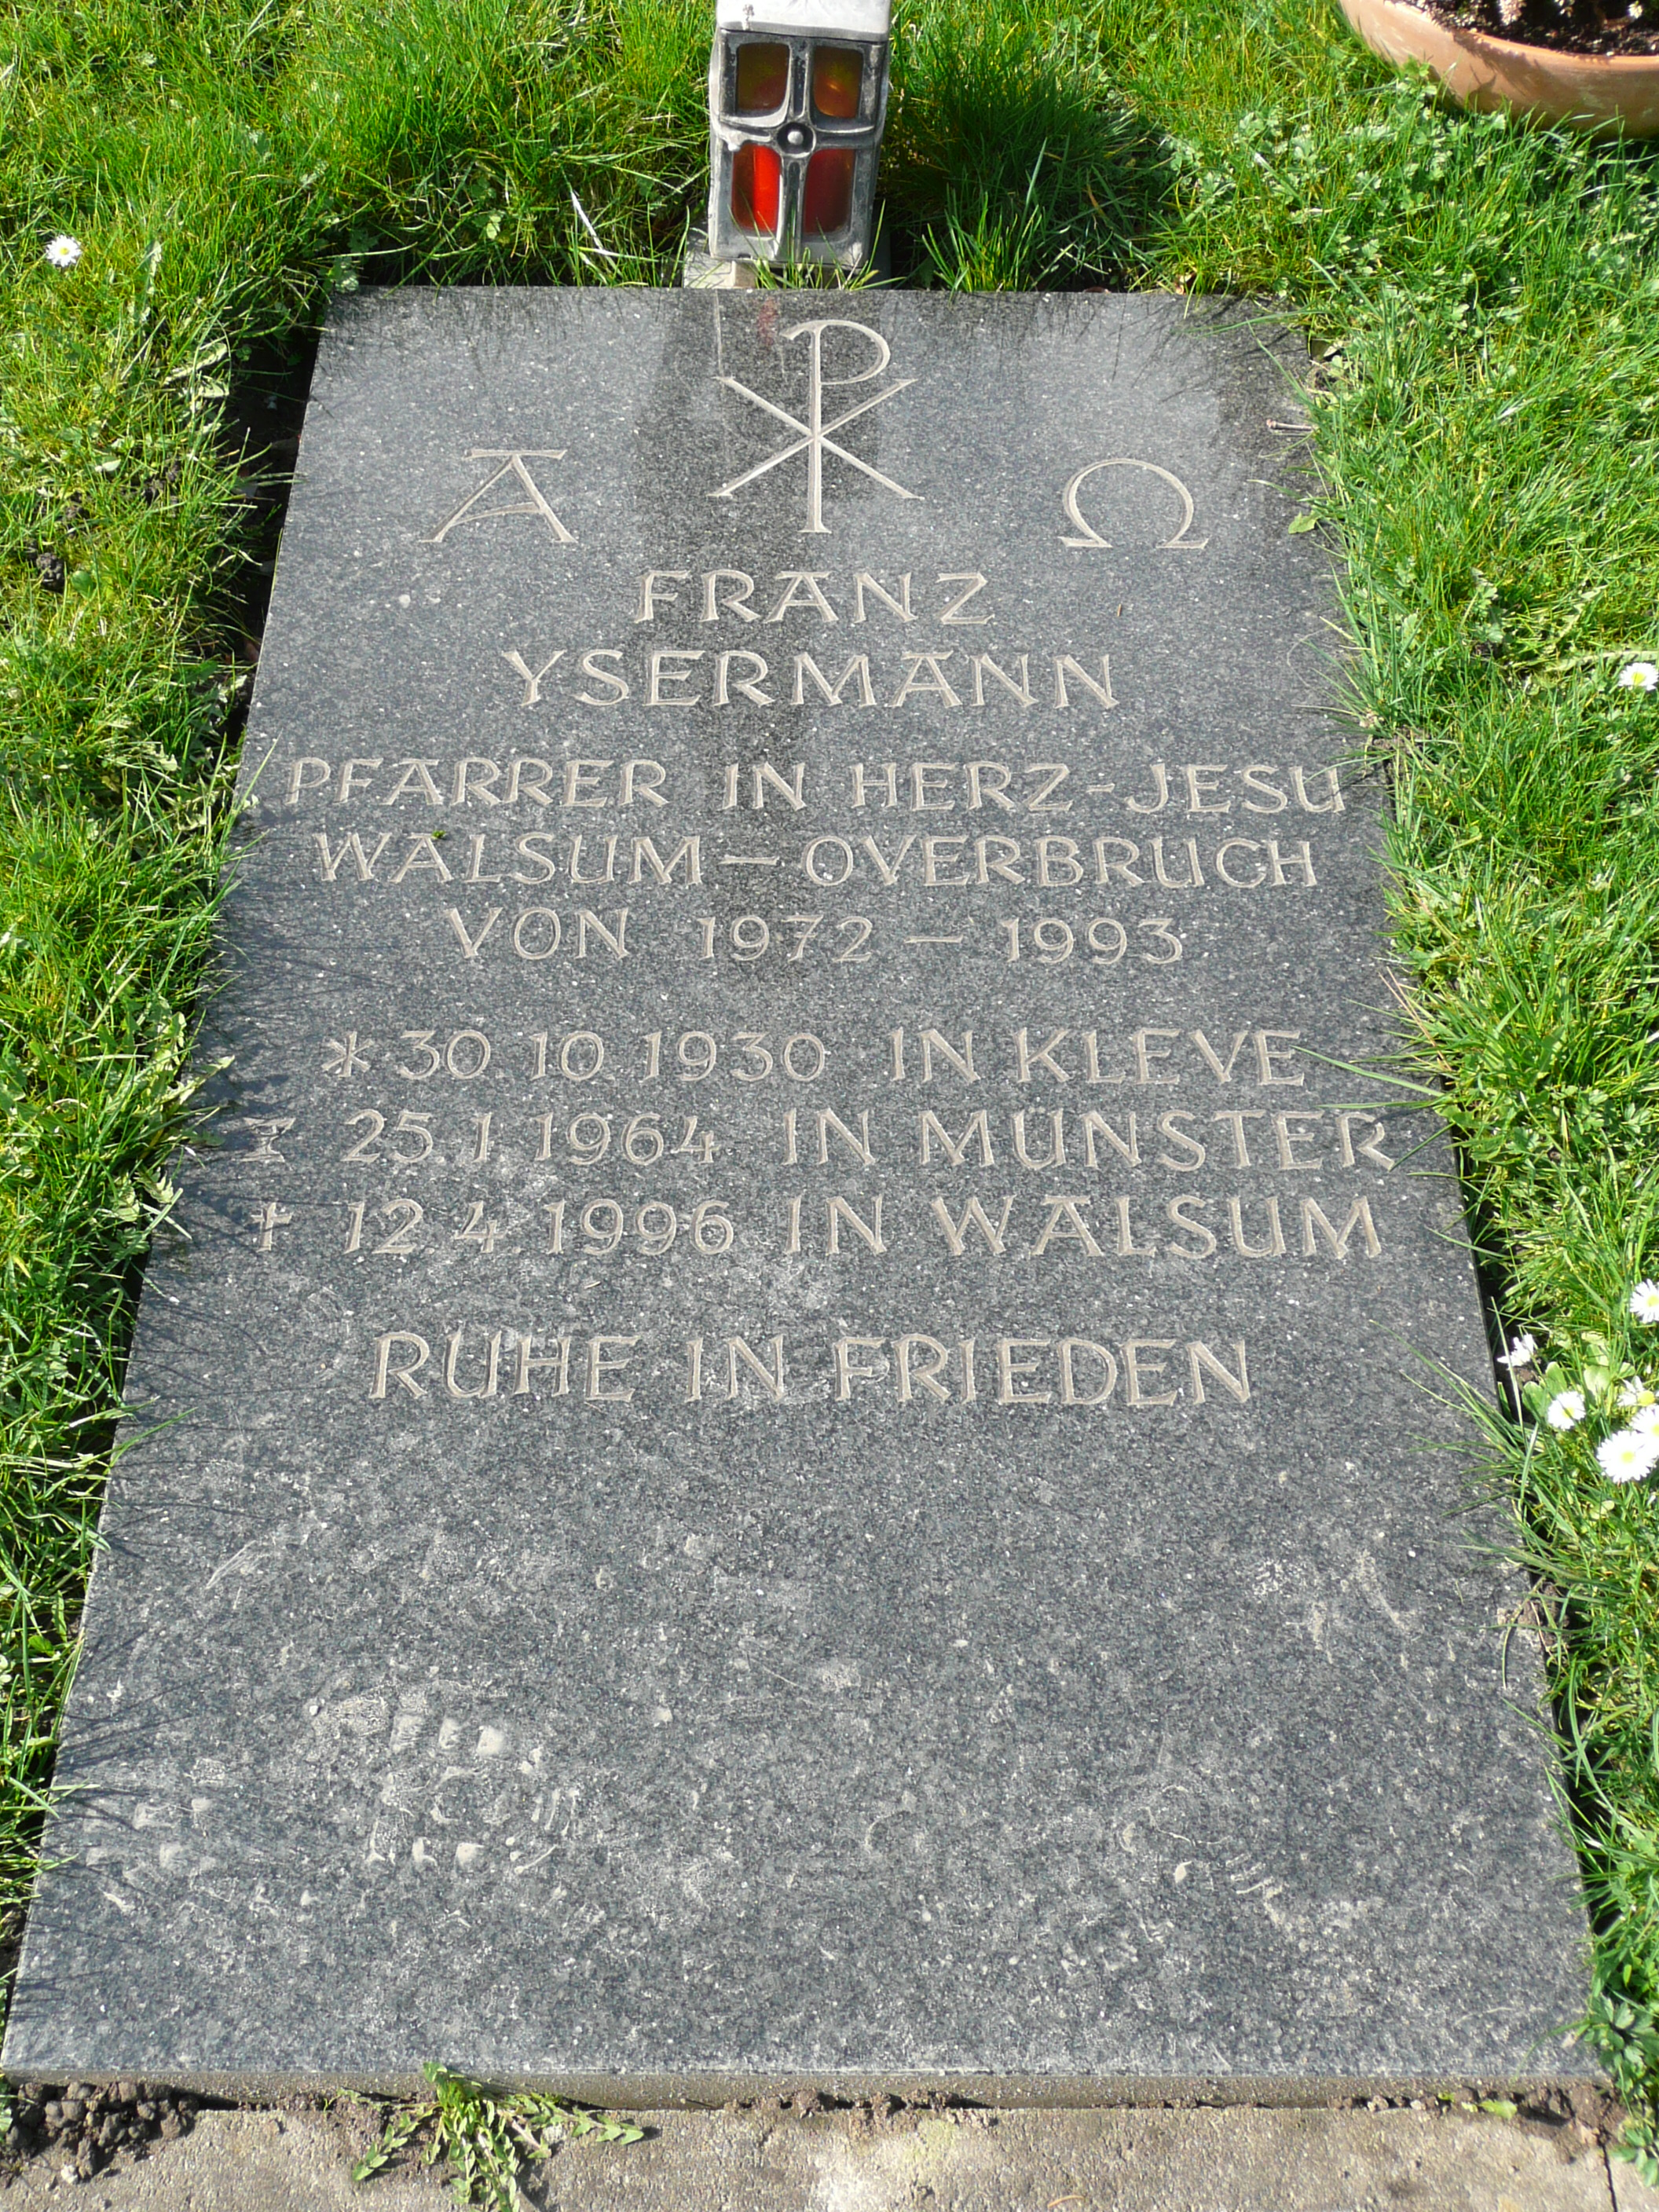 Grabstein am Hochkreuz 
Pfarrer Fraz Ysermann